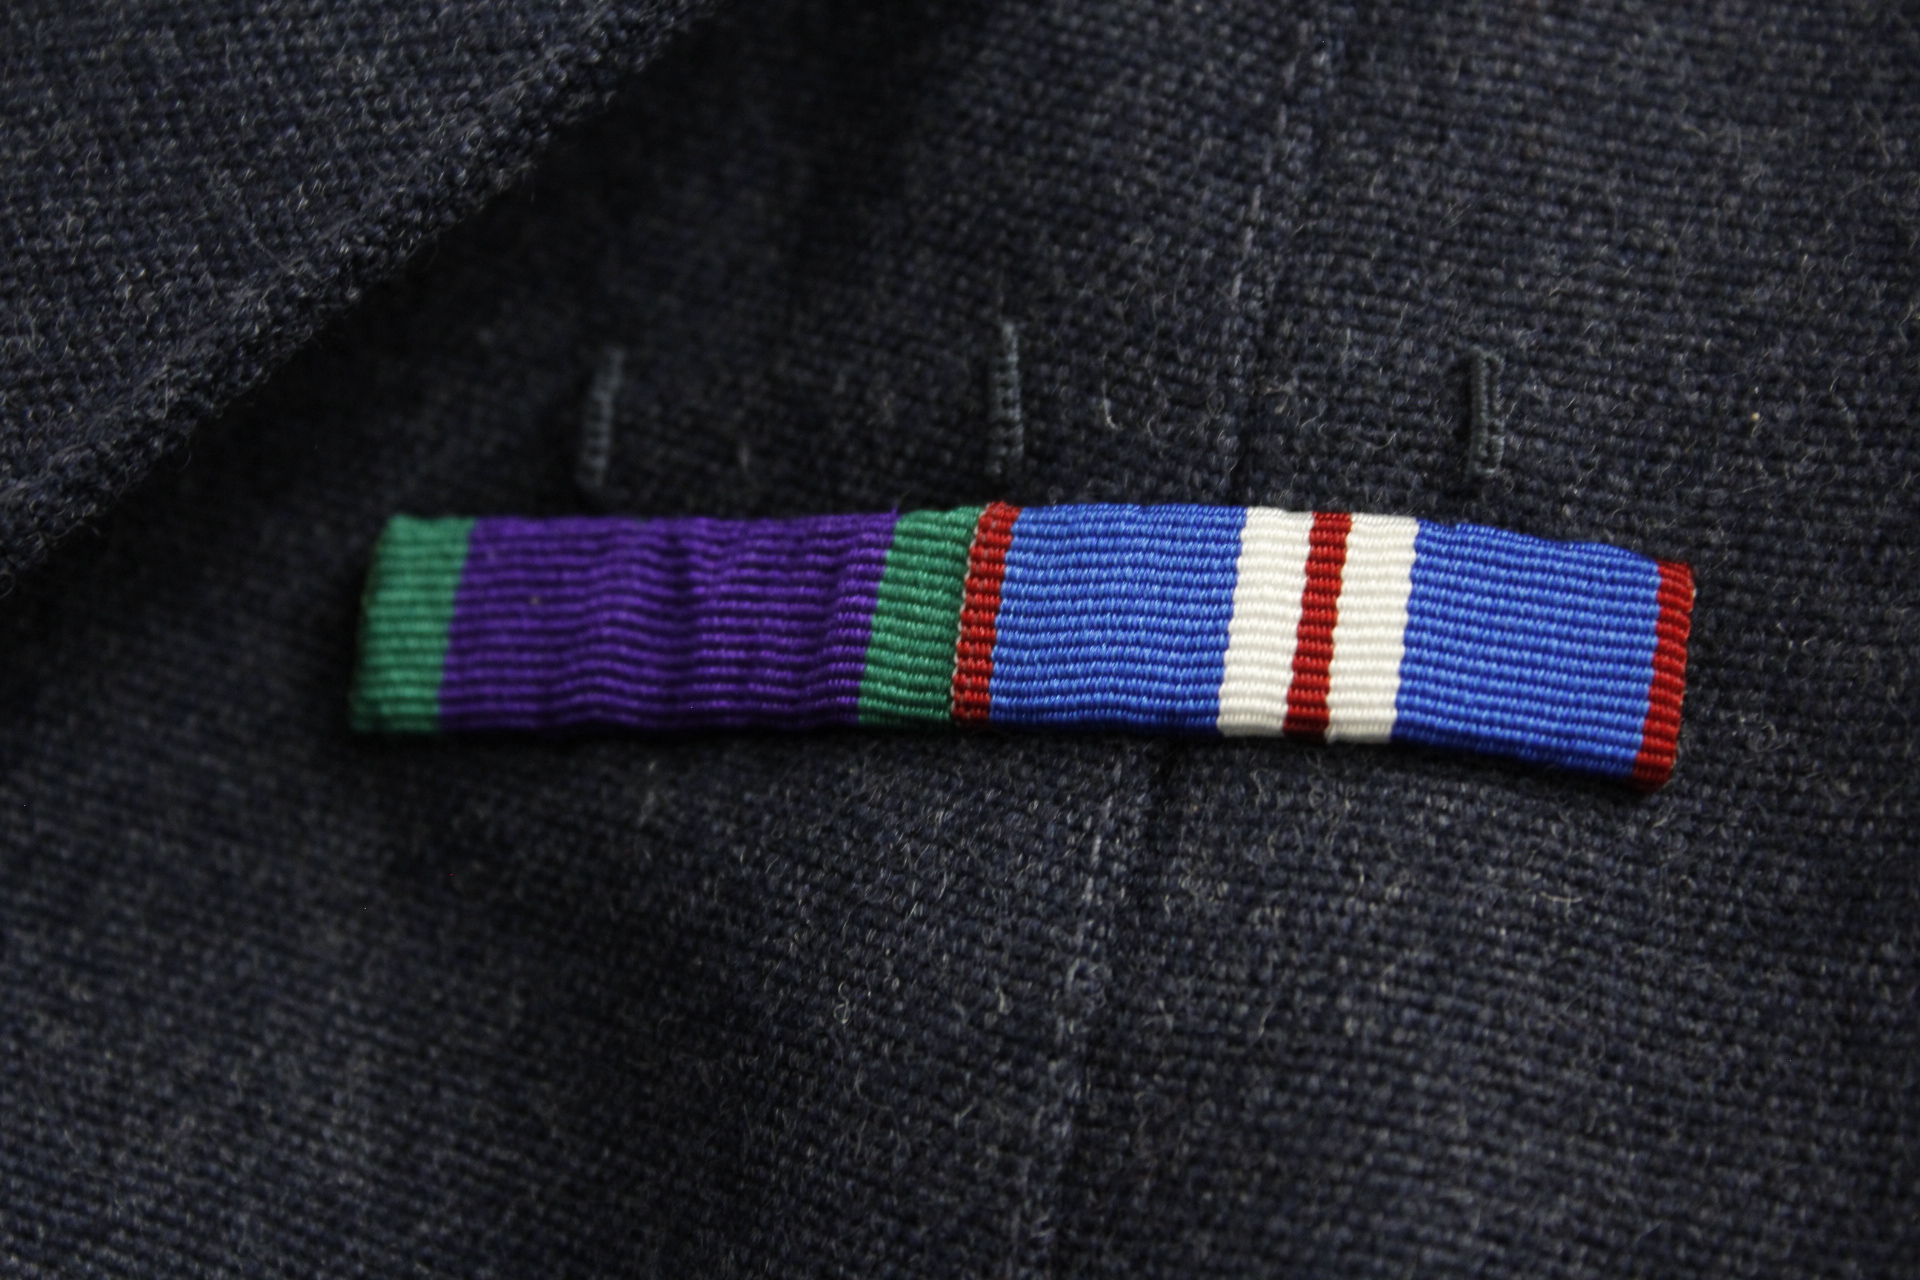 British Royal Air Force dress uniform jacket having interior label "Women's No.1 Dress", Staybrite - Image 4 of 5